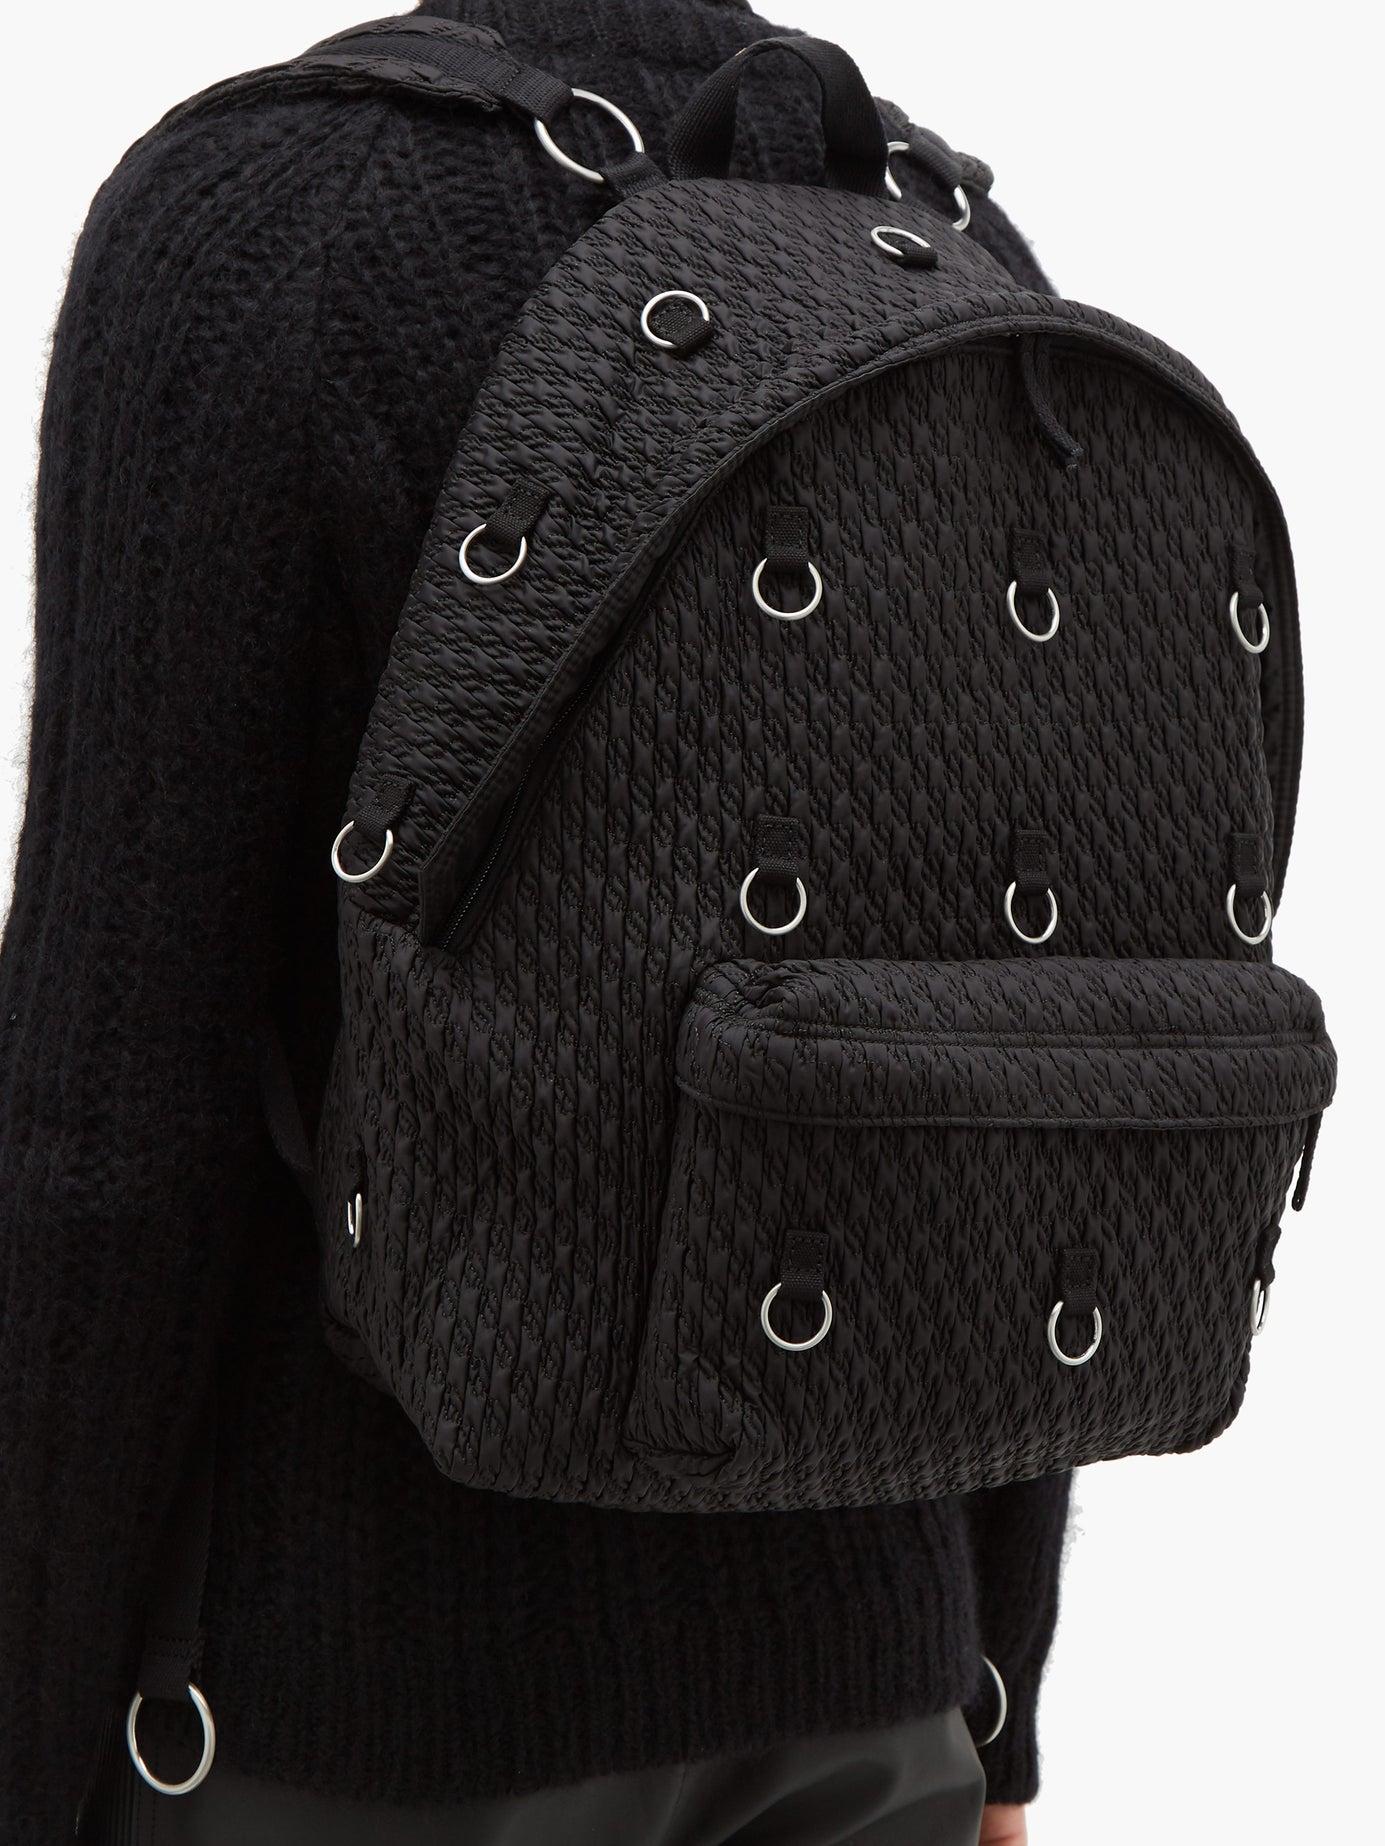 Eastpak X Raf Simons Patterned Ring Backpack in Black for Men - Lyst